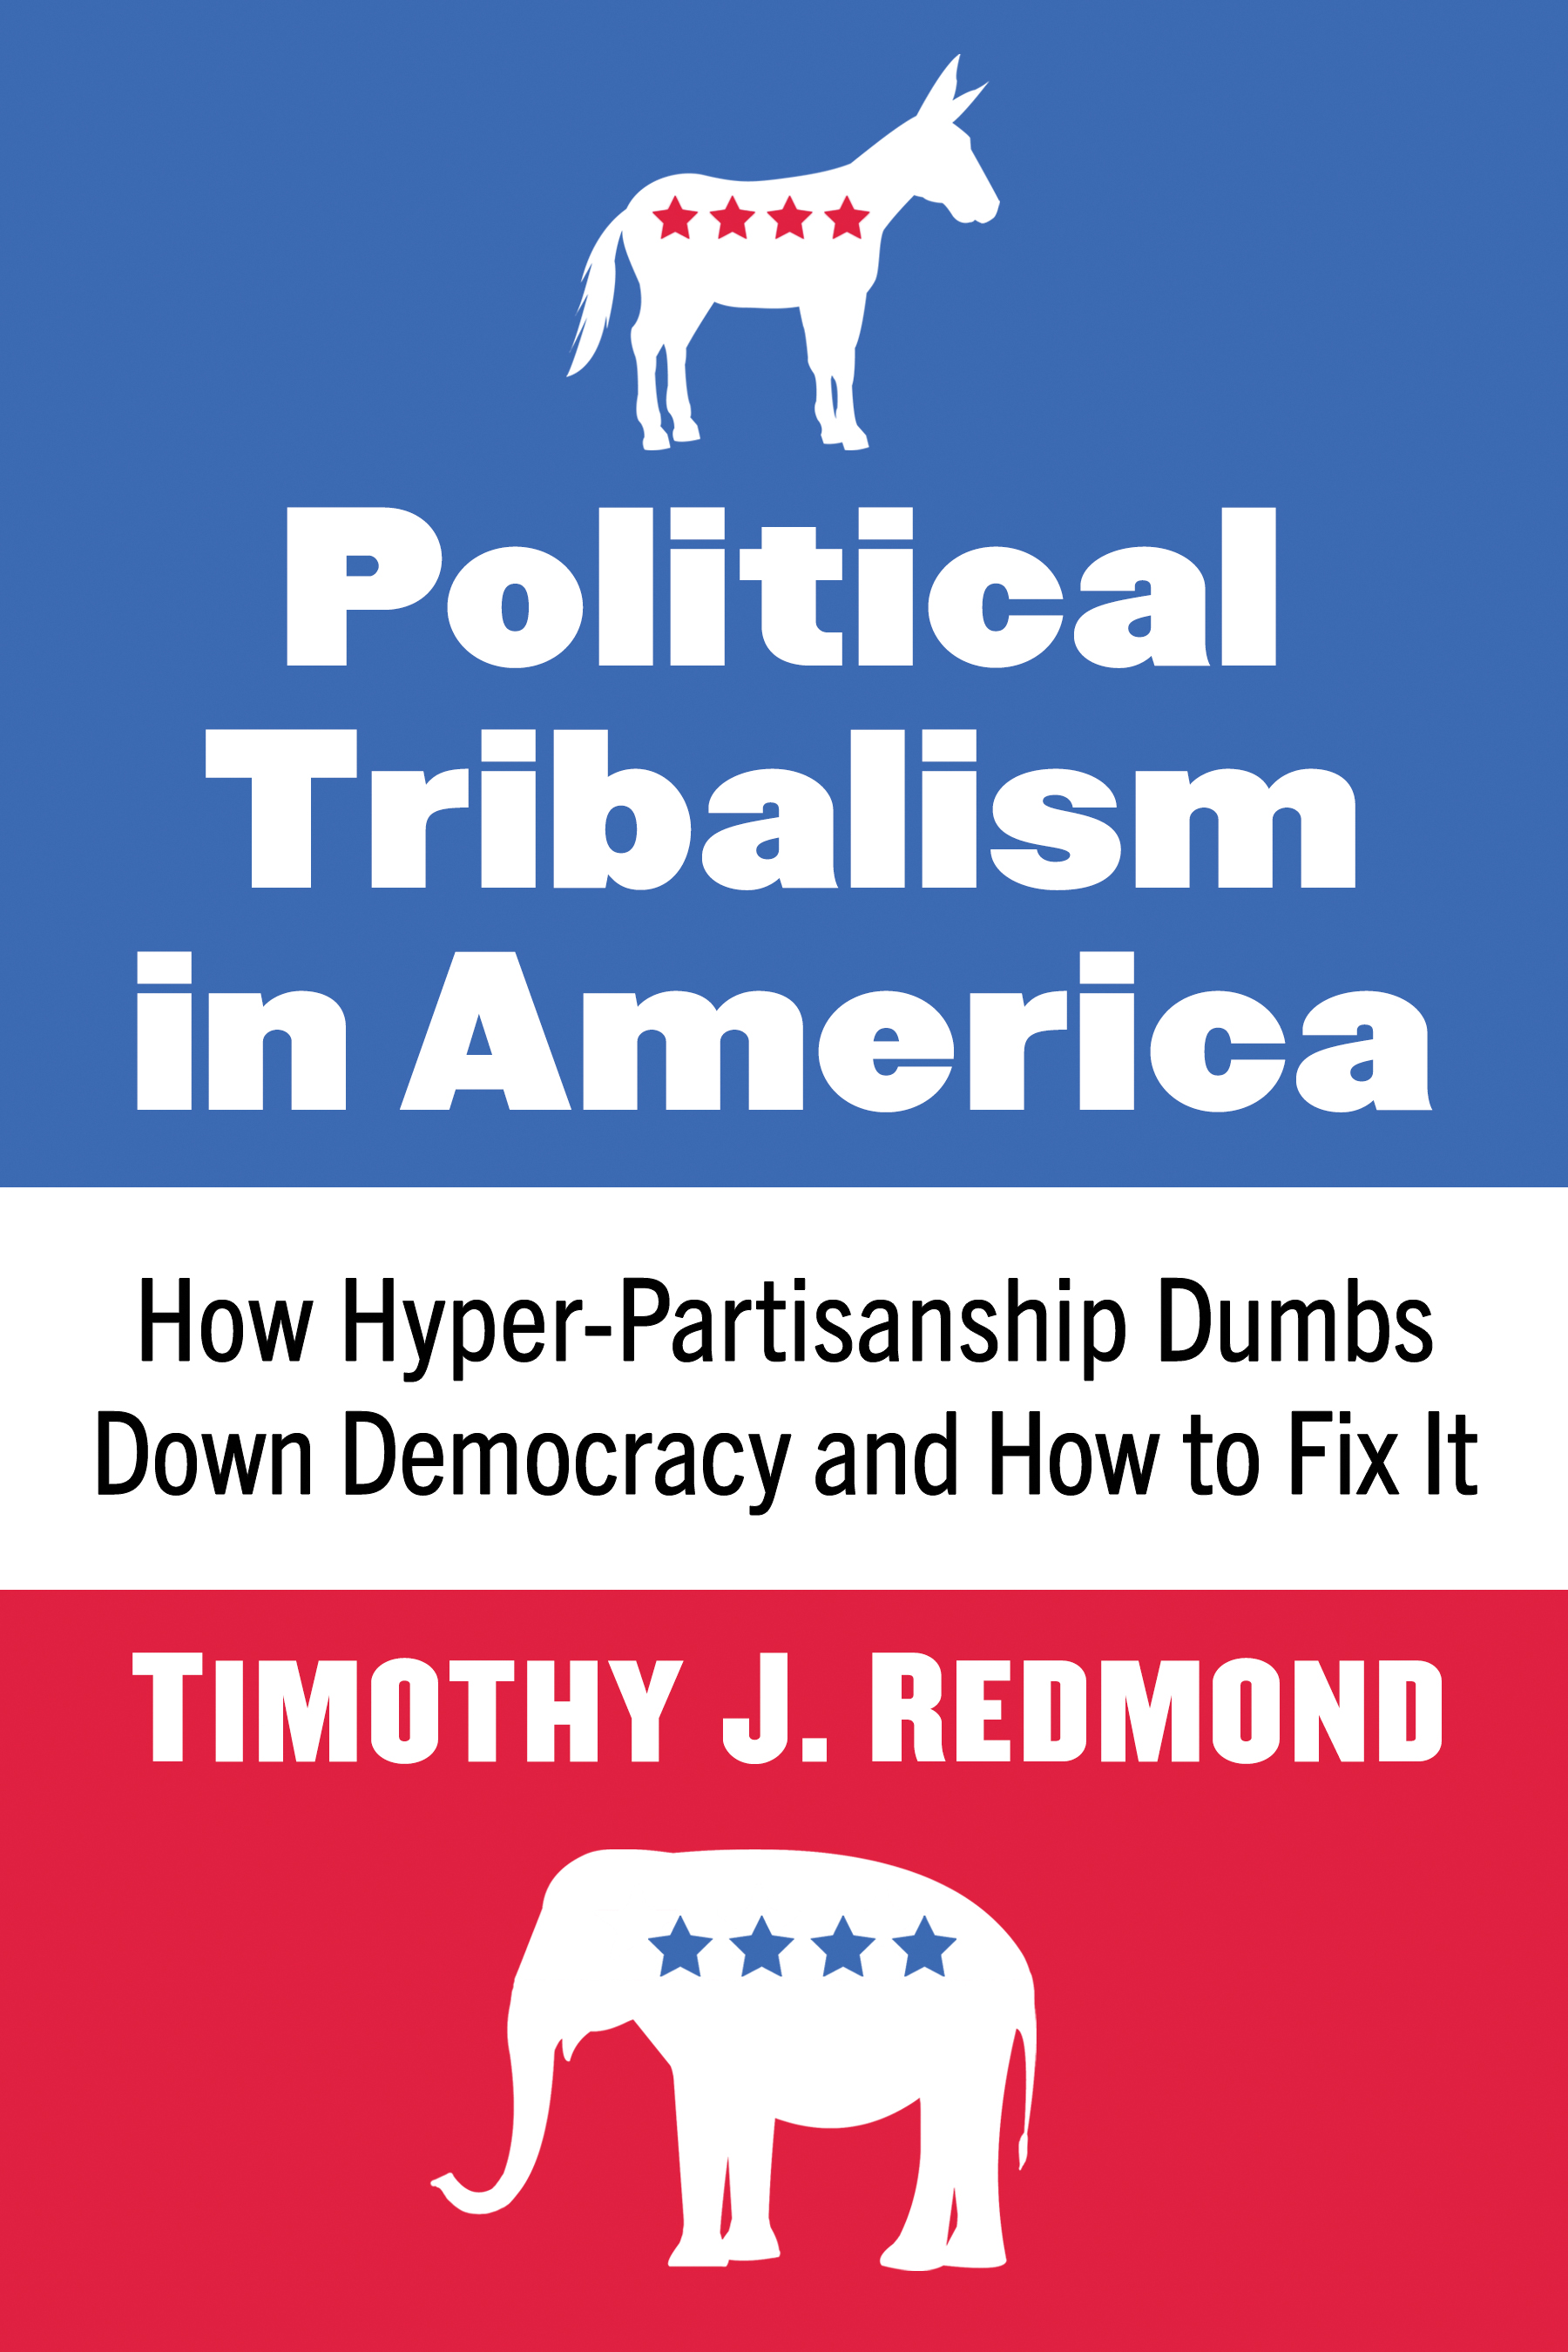 Political Tribalism in America